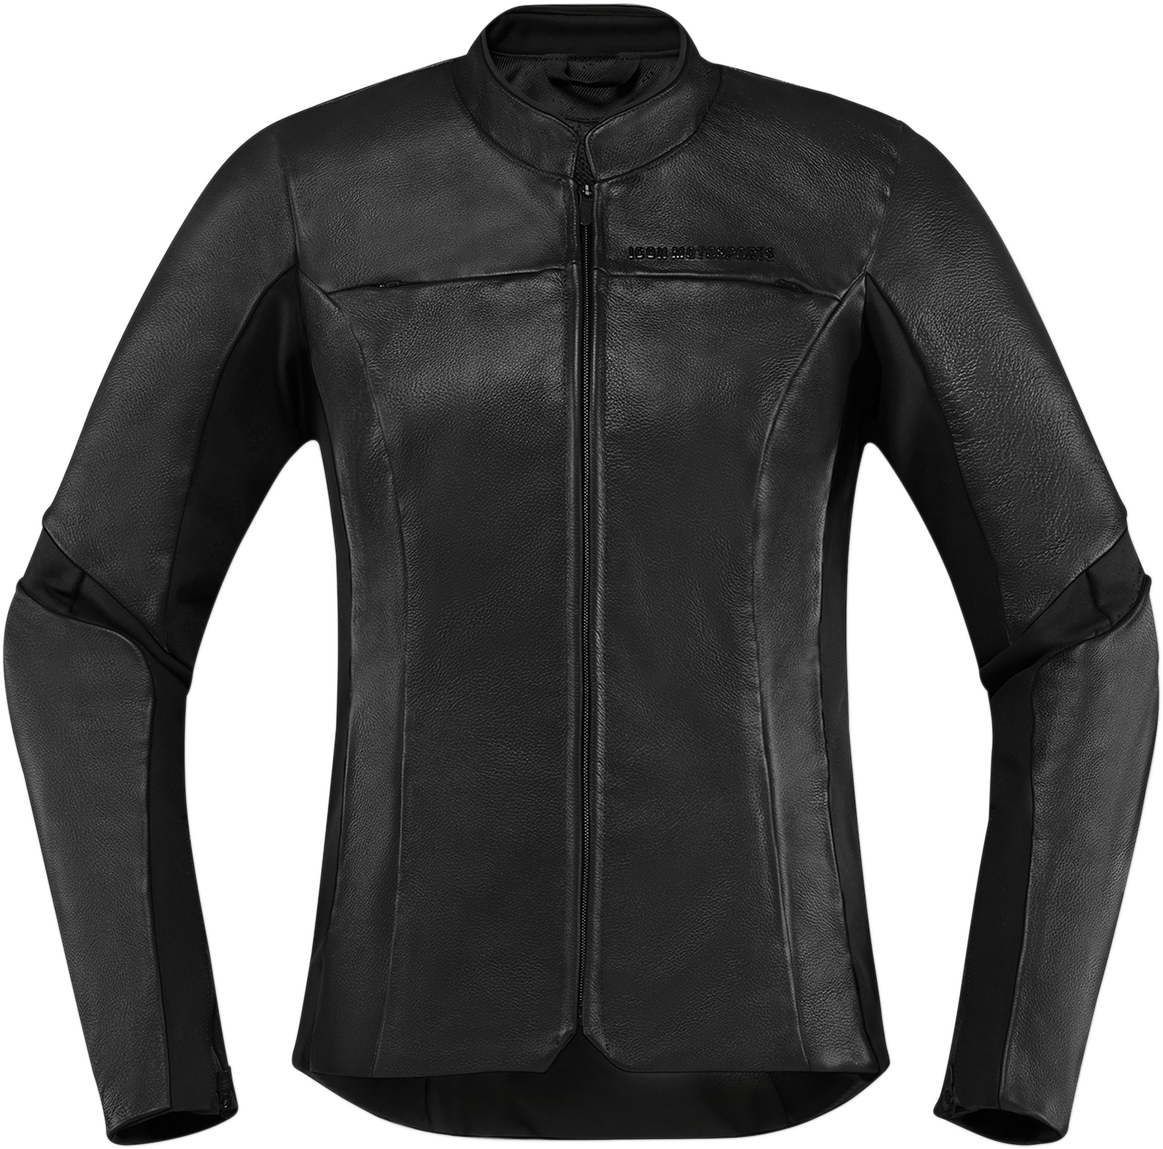 ICON Women's Overlord™ Jacket - Black - Large 2813-0816